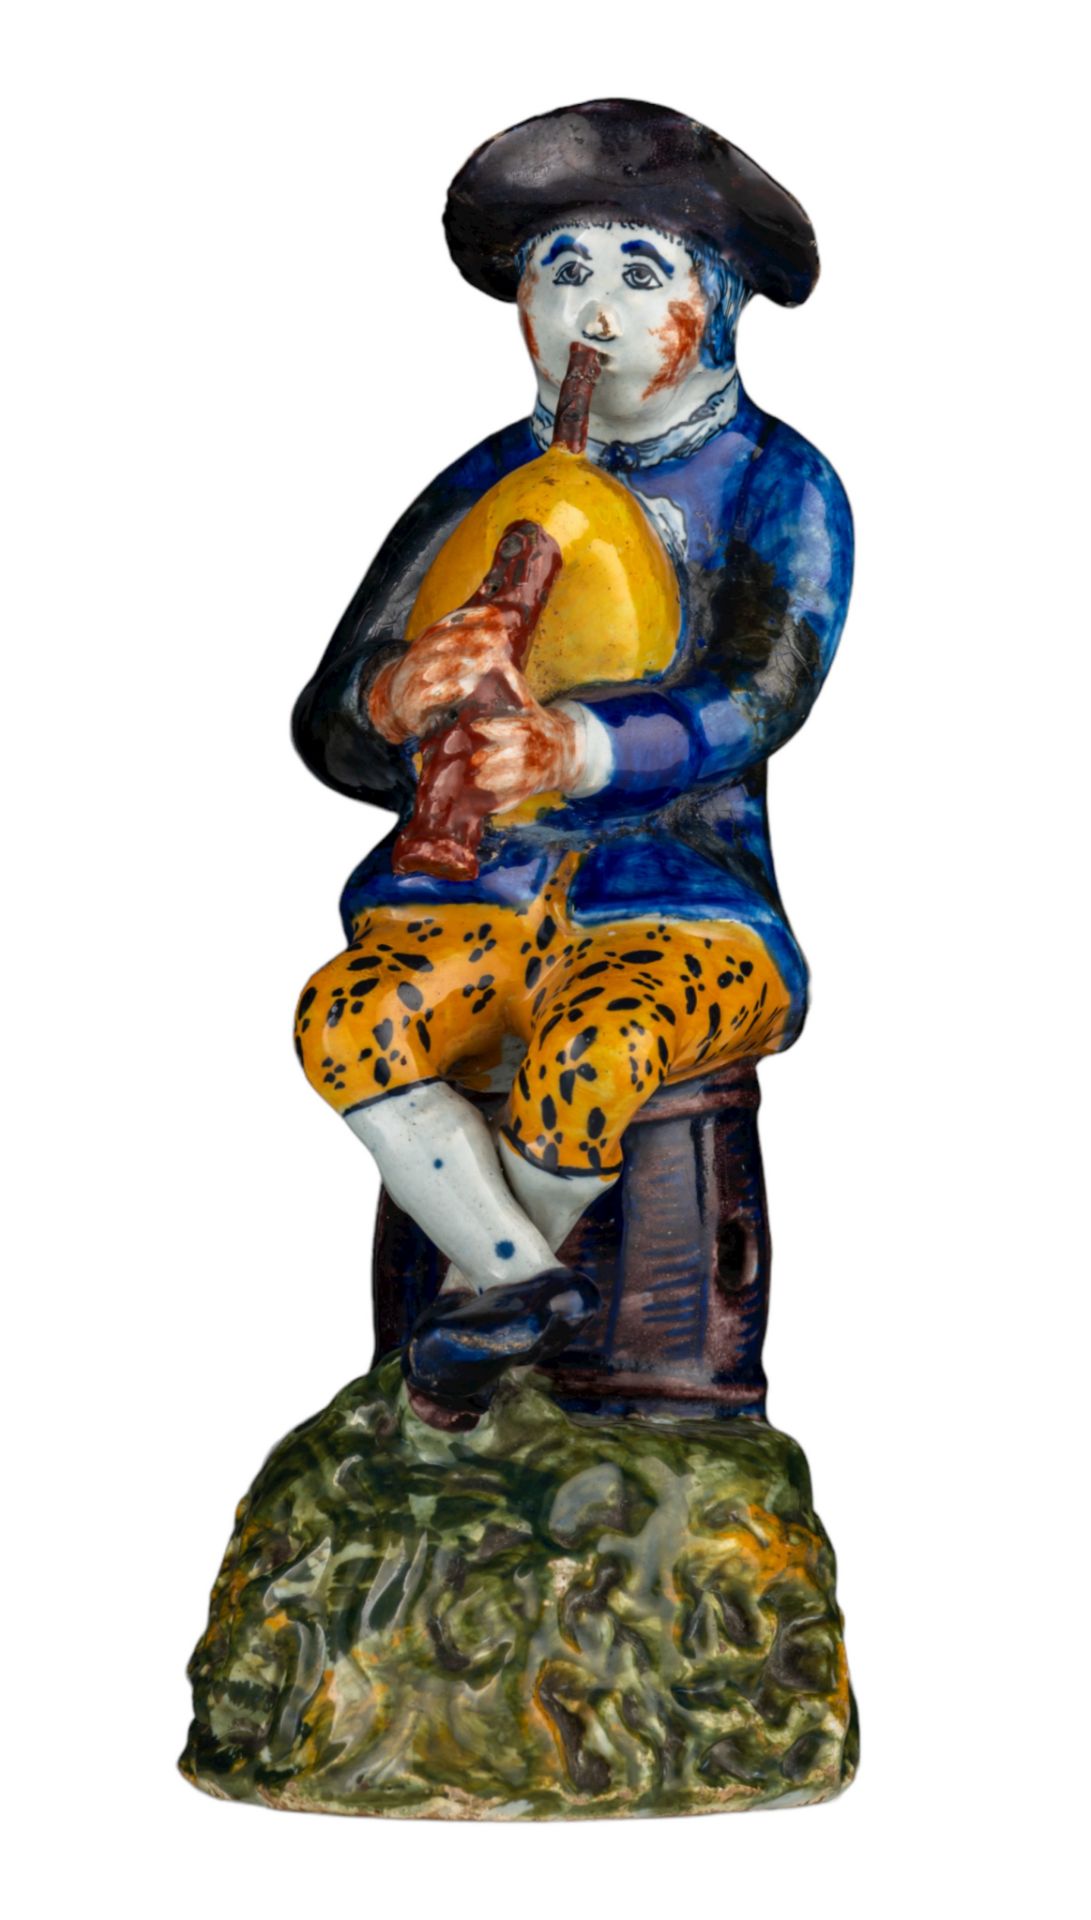 An 18thC Dutch Delft polychrome decorated figurine of a bagpiper, H 21 cm